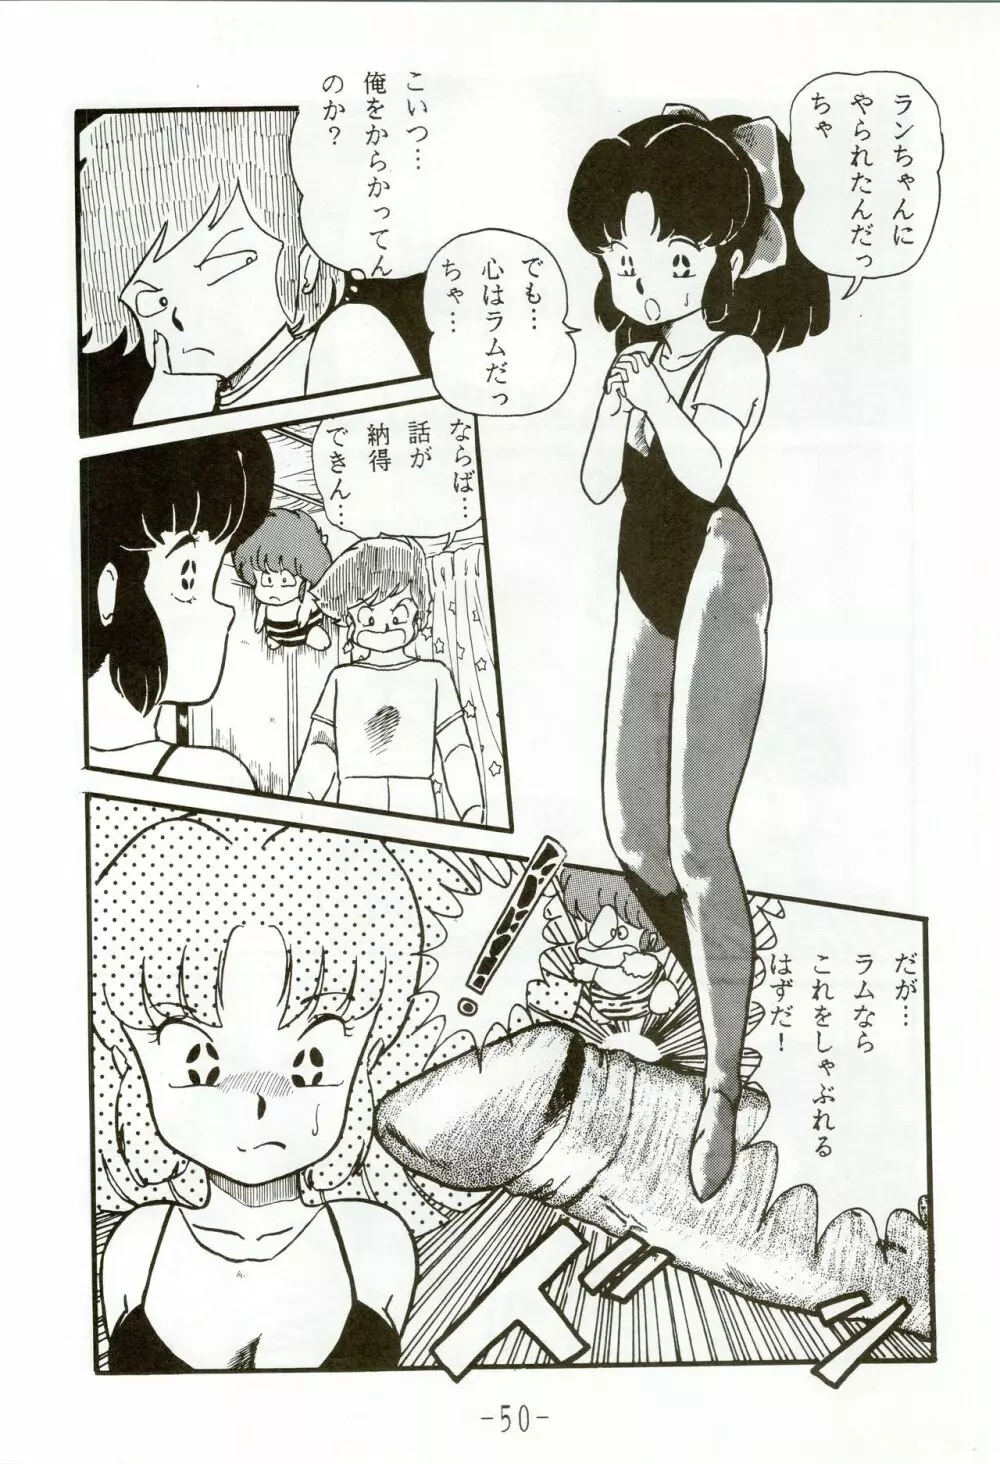 甲冑伝説 - page50